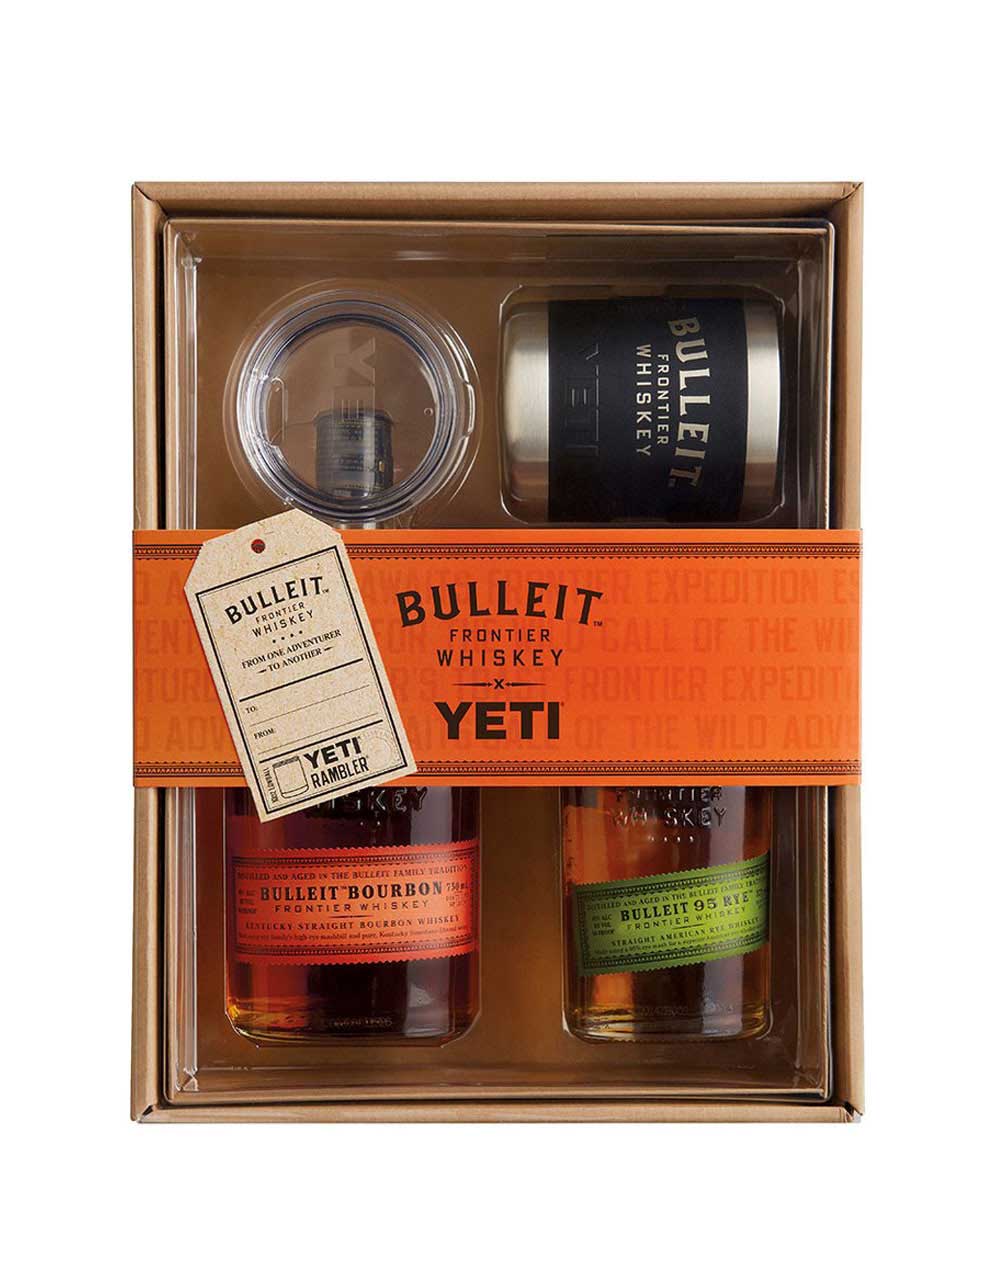 Bulleit Frontier Bourbon Whiskey Gift Yeti Set